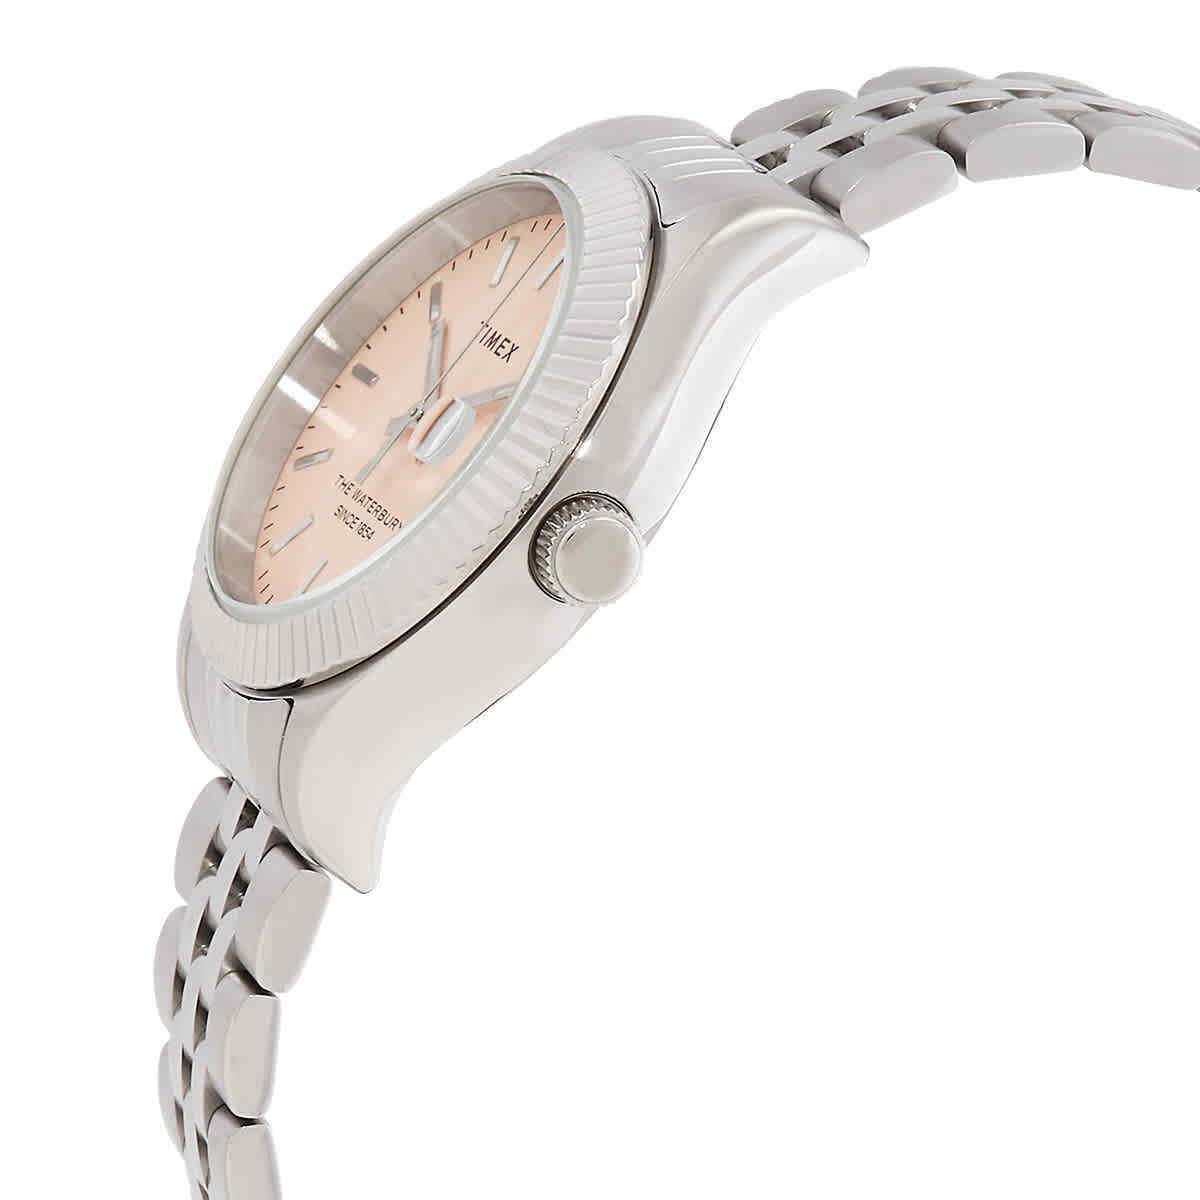 Timex Waterbury Legacy Quartz Pink Dial Ladies Watch TW2V31500 - Dial: Pink, Band: Silver-tone, Bezel: Silver-tone